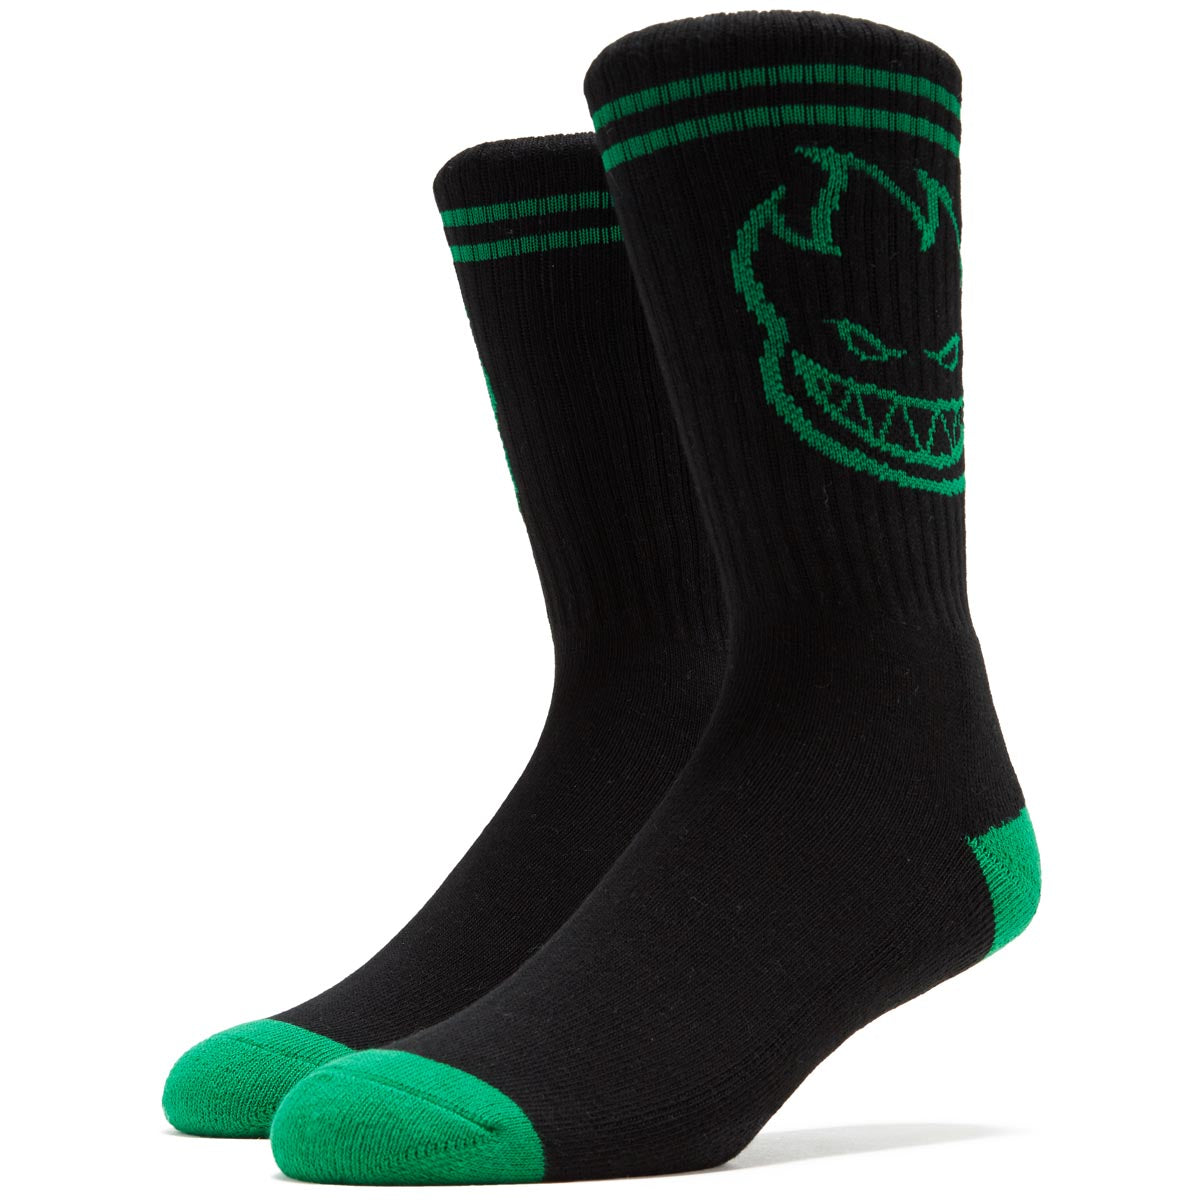 Spitfire Bighead Socks - Black/Green image 1